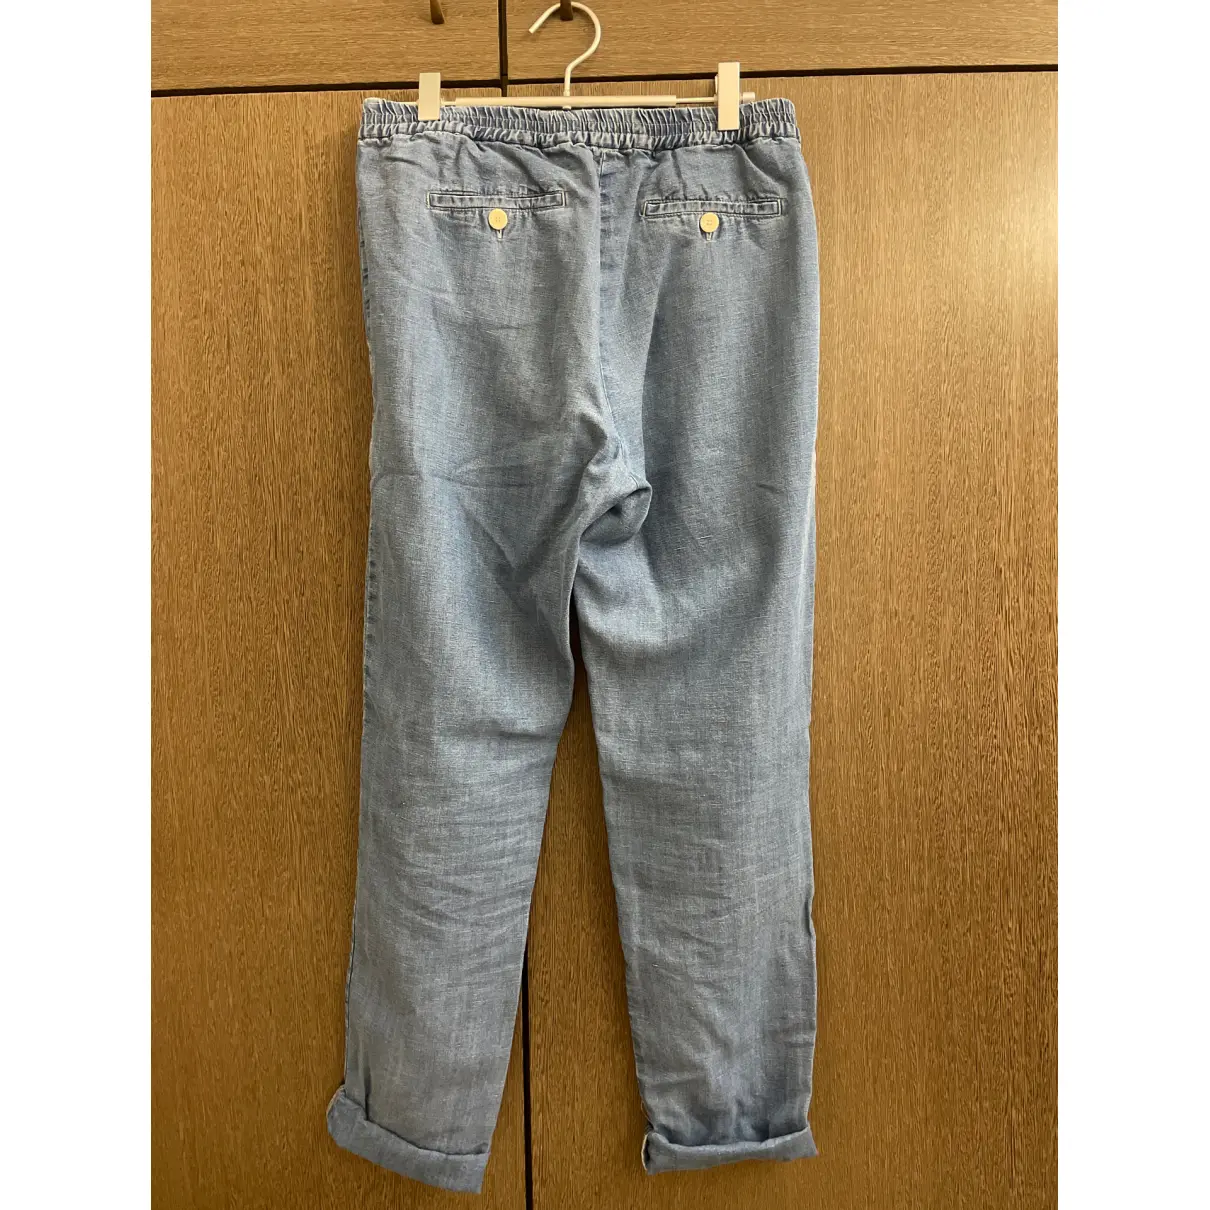 Buy Hartford Linen straight pants online